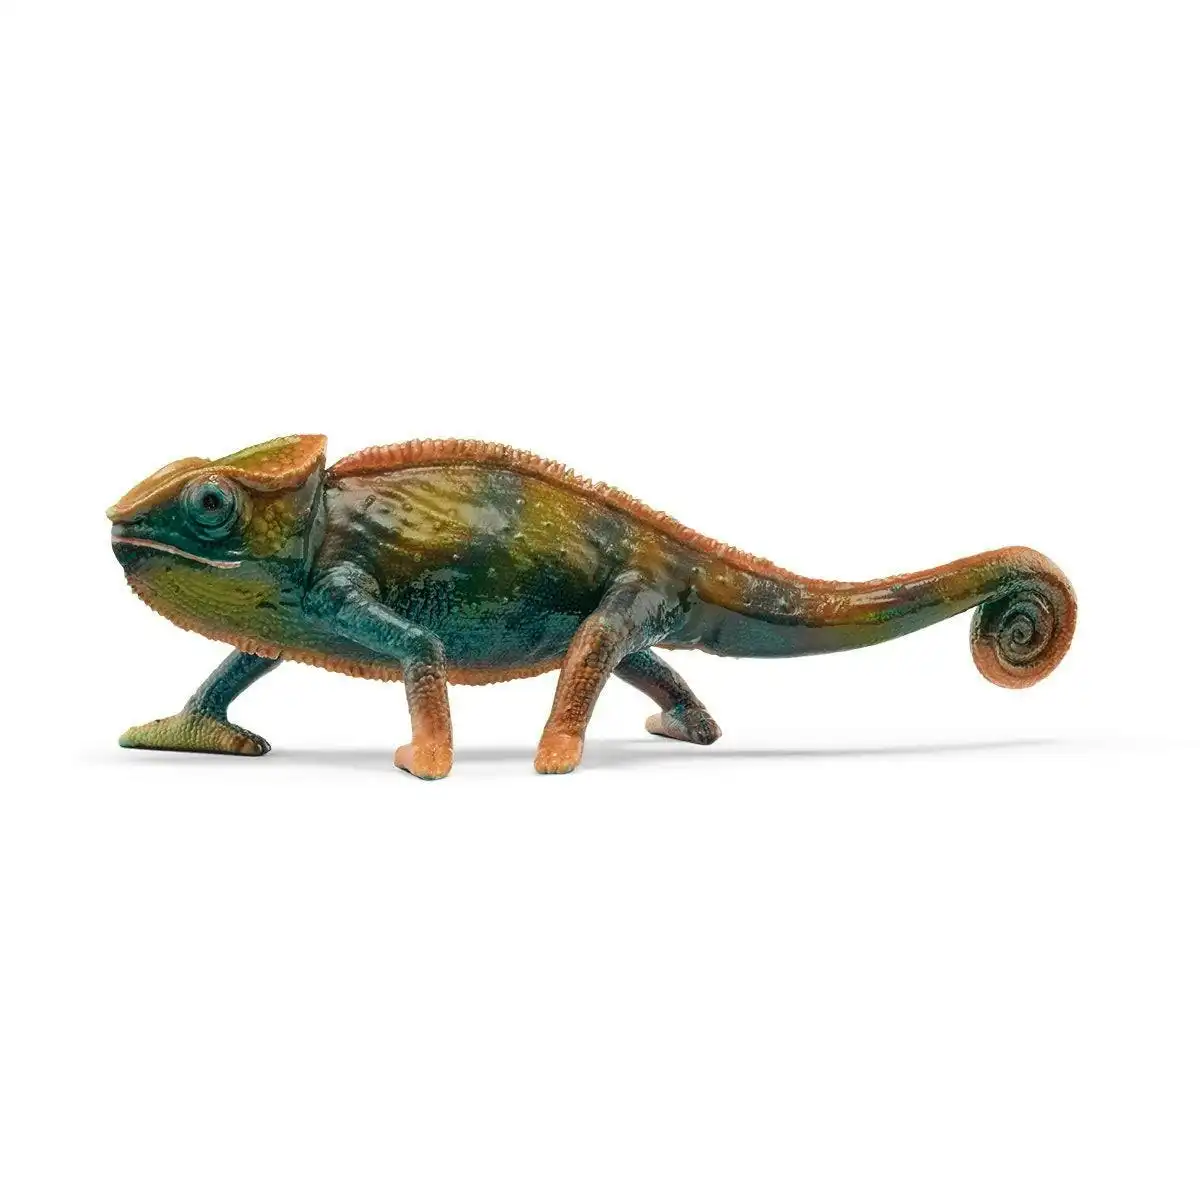 Schleich - Chameleon Lizard Reptile Figurine